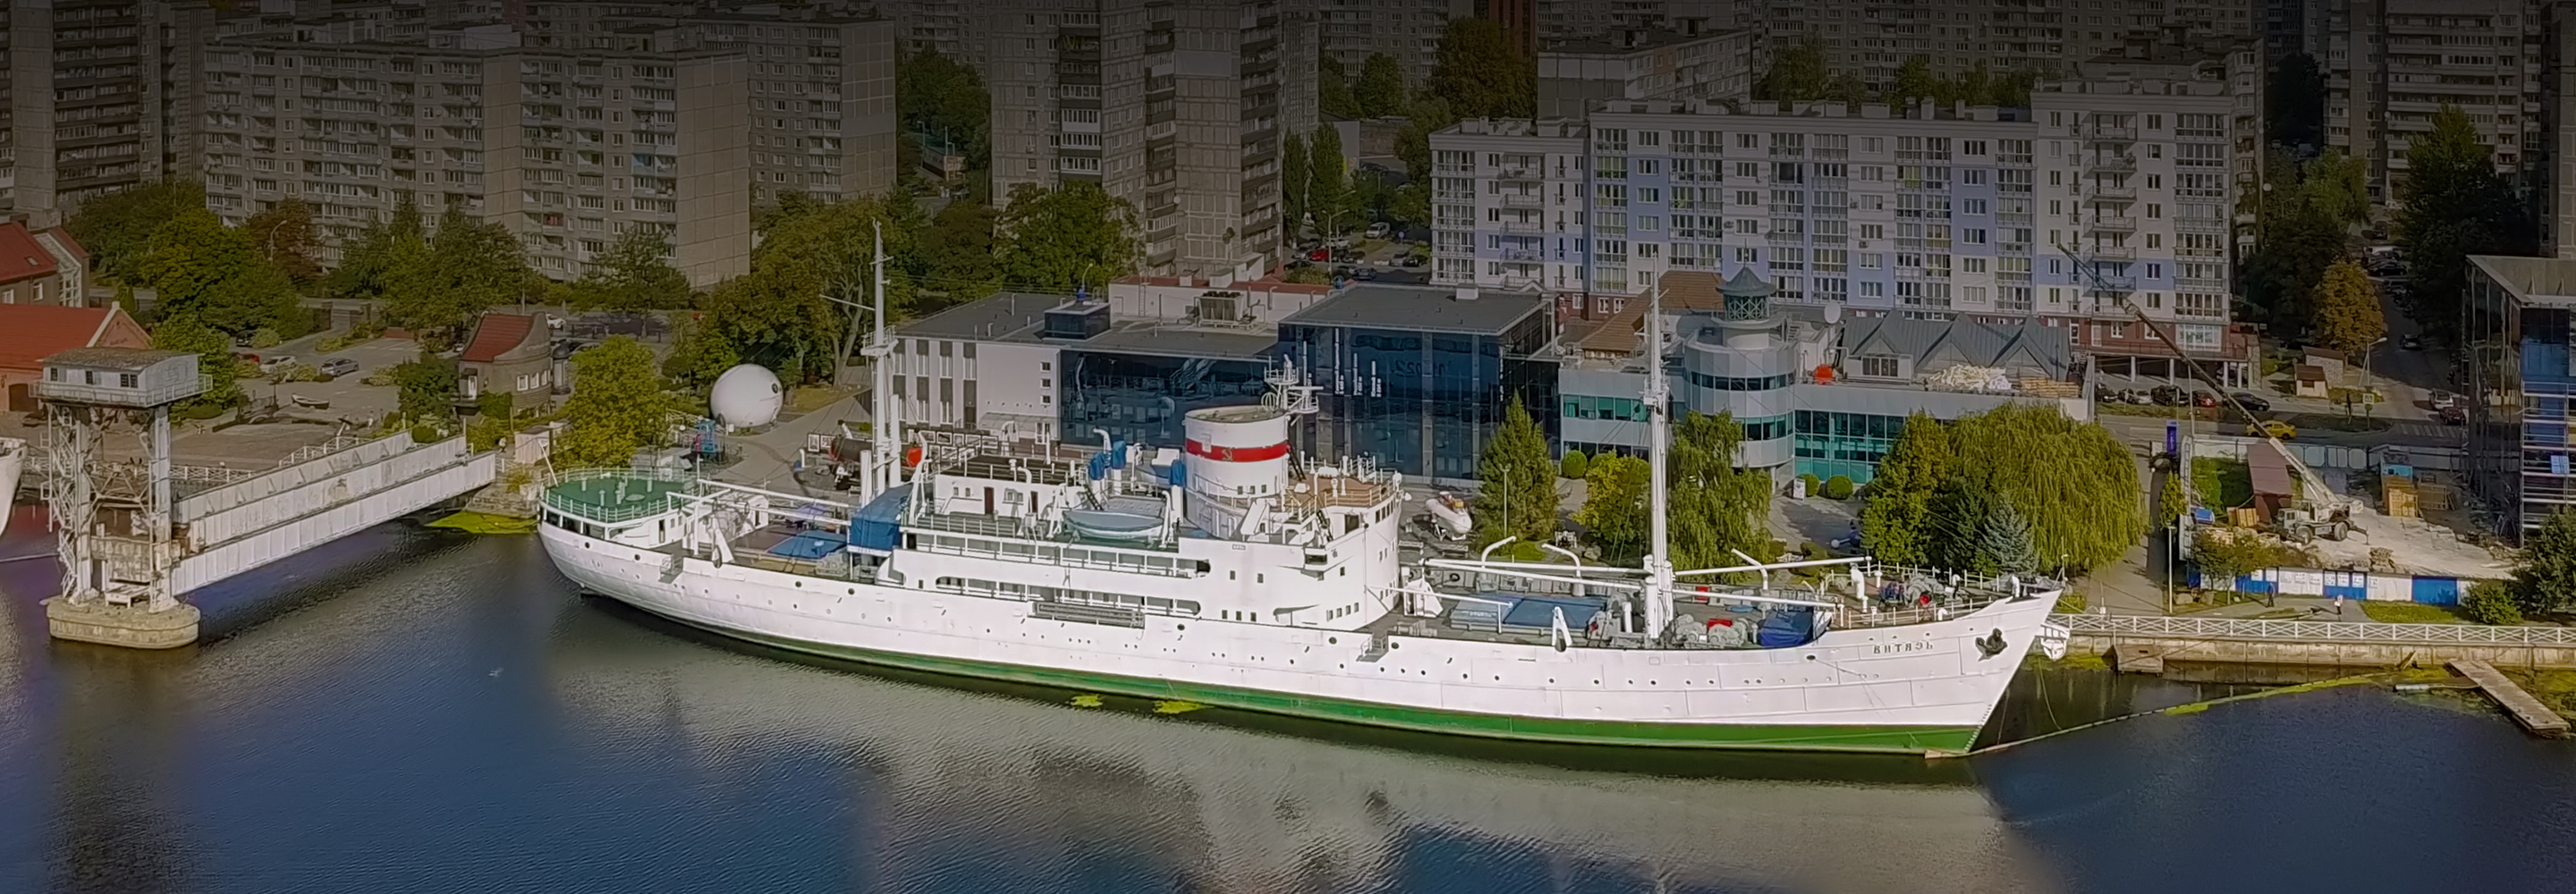 На аукционе выставили мини-копию корабля XIX века за 5,2 миллиона рублей